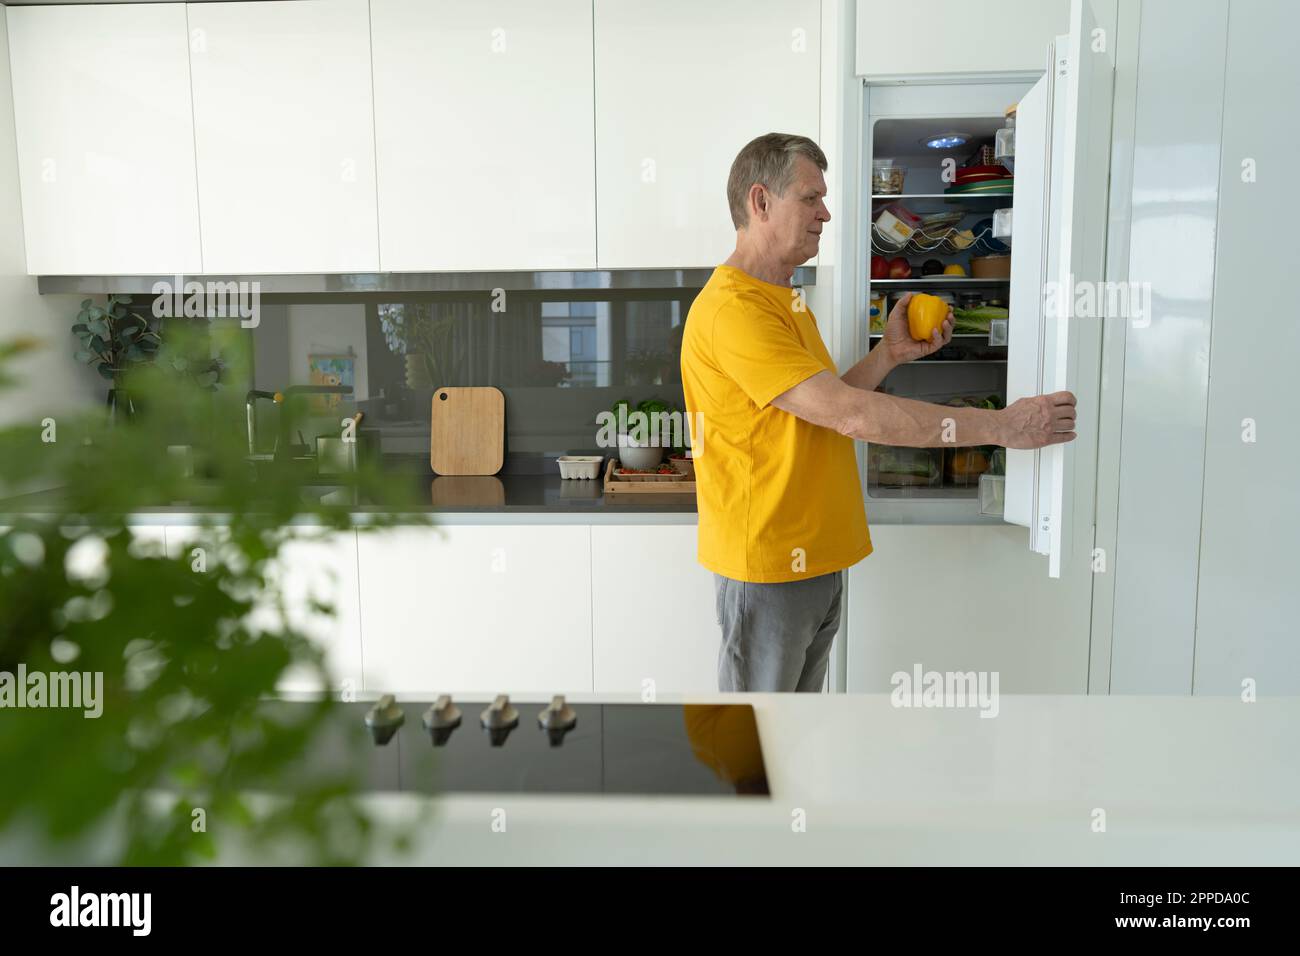 Senior man opening refrigerator door in kitchen at home Stock Photo